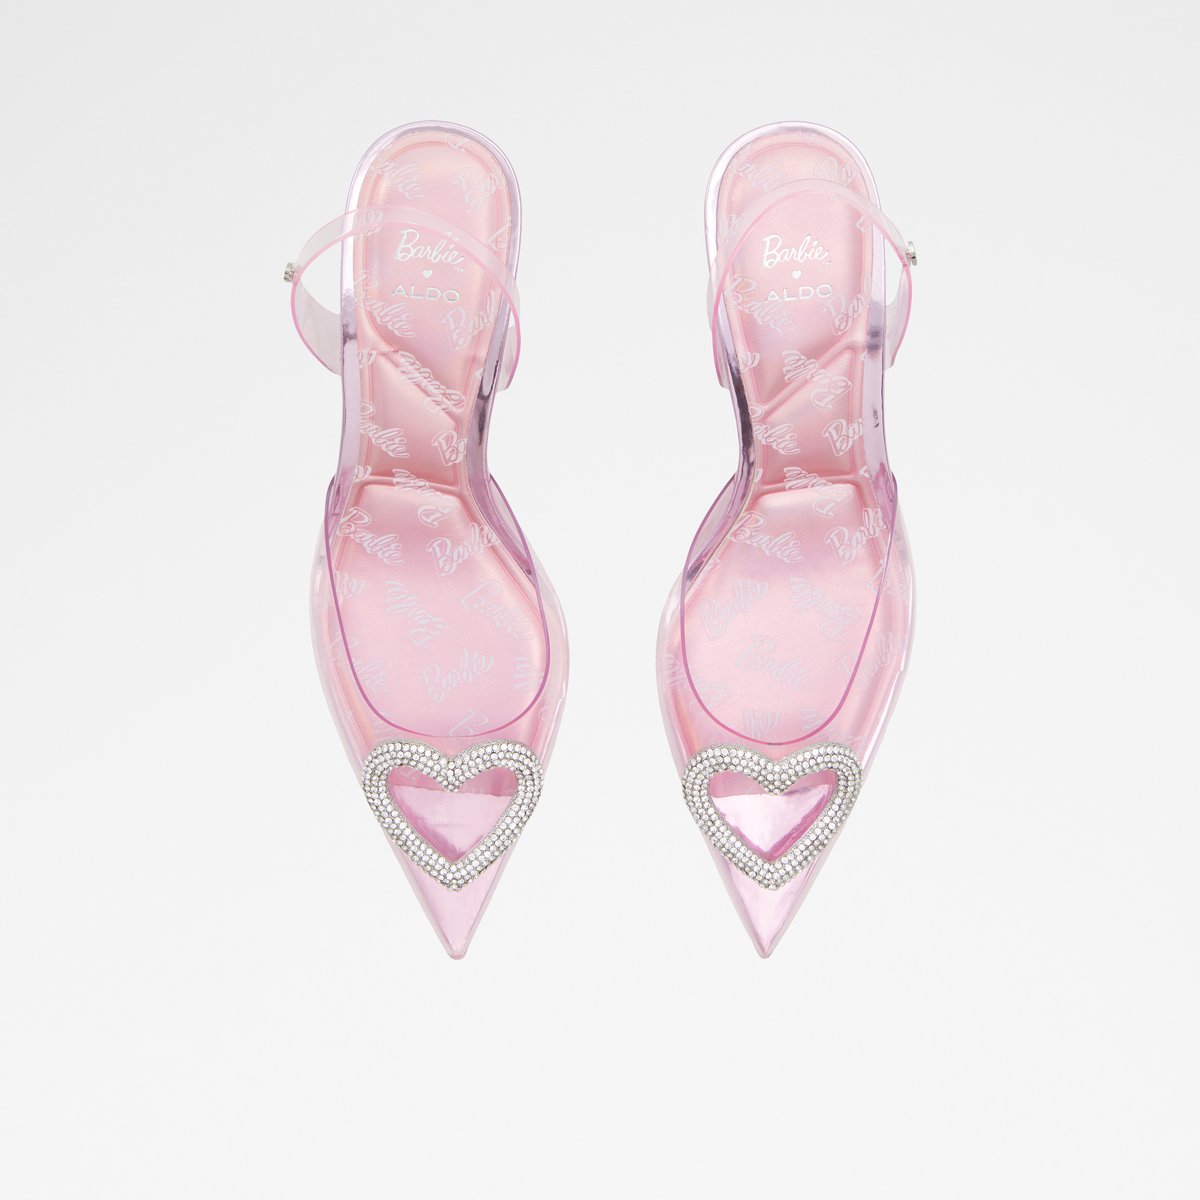 Barbieslingb / Heeled Women Shoes - Light Pink - ALDO KSA